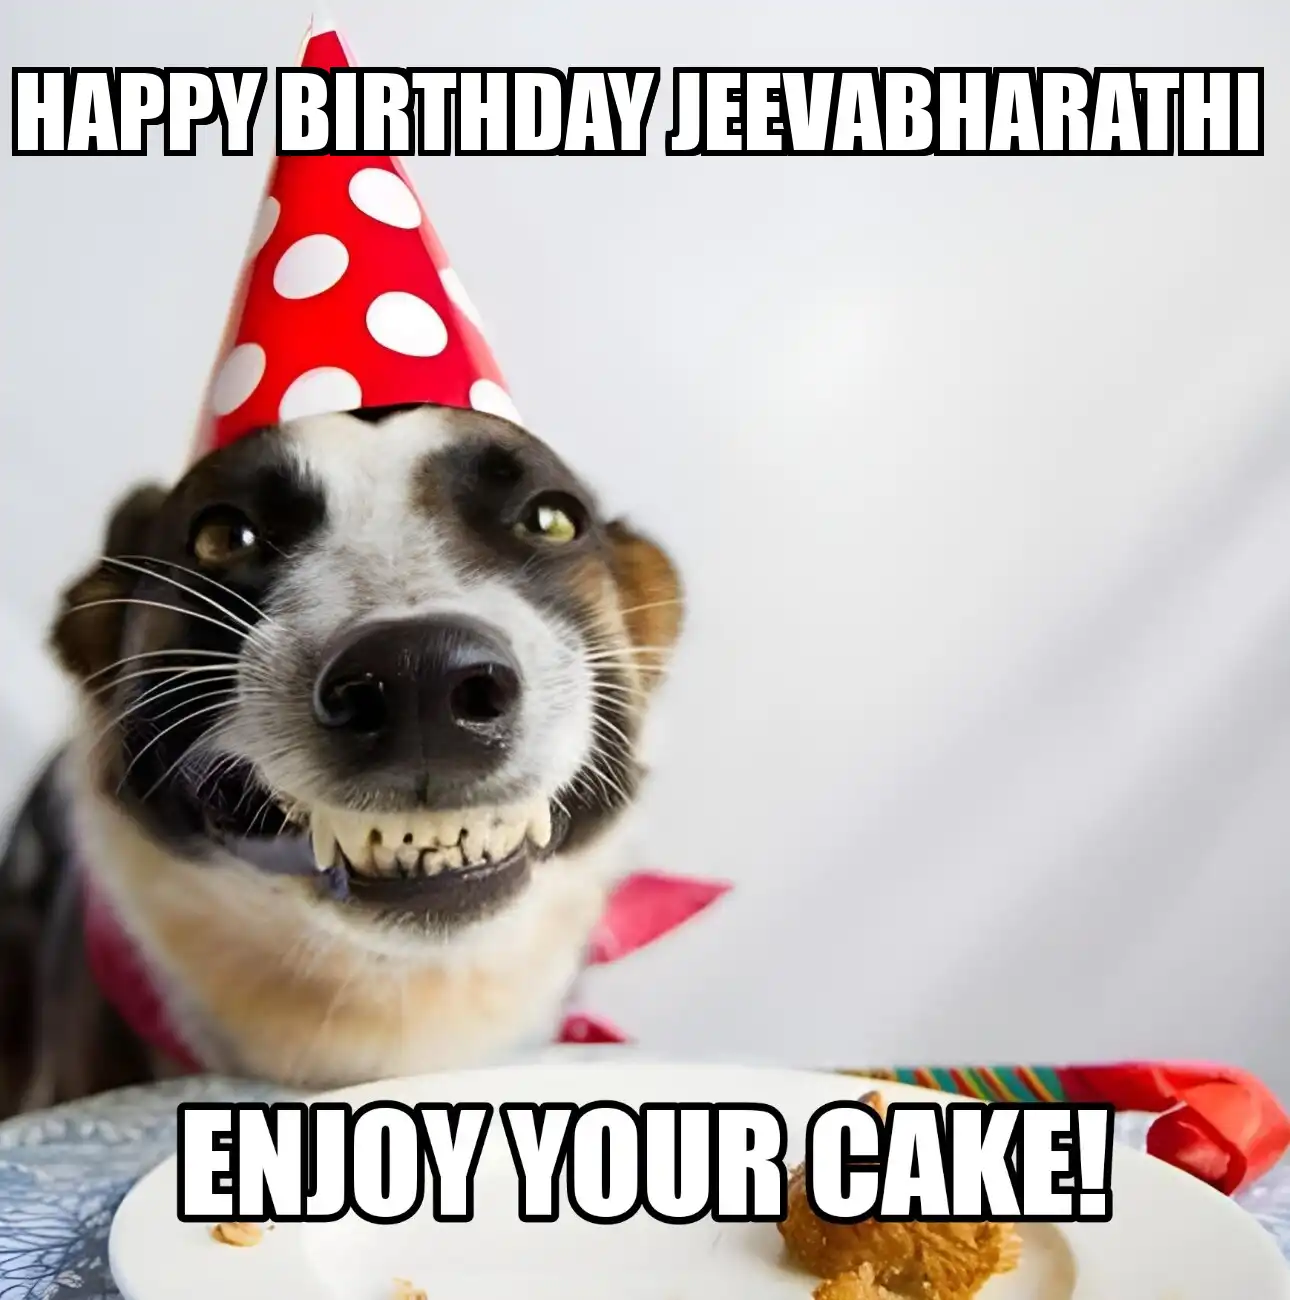 Happy Birthday Jeevabharathi Enjoy Your Cake Dog Meme